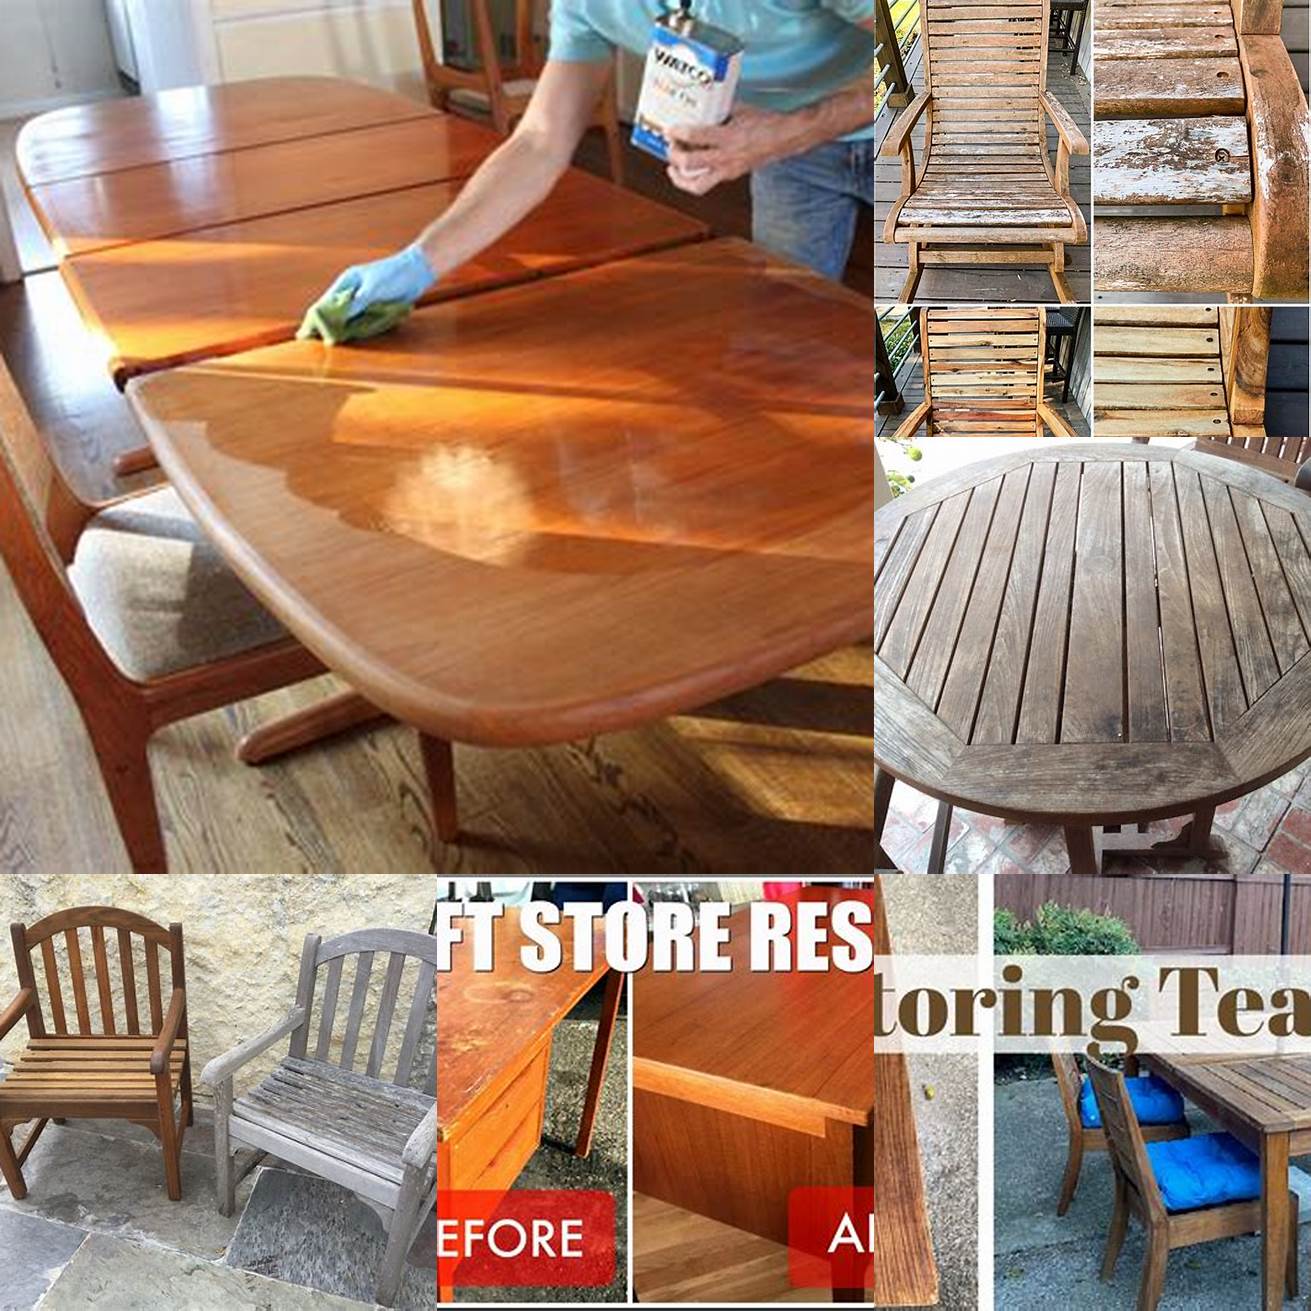 A teak furniture restoration project